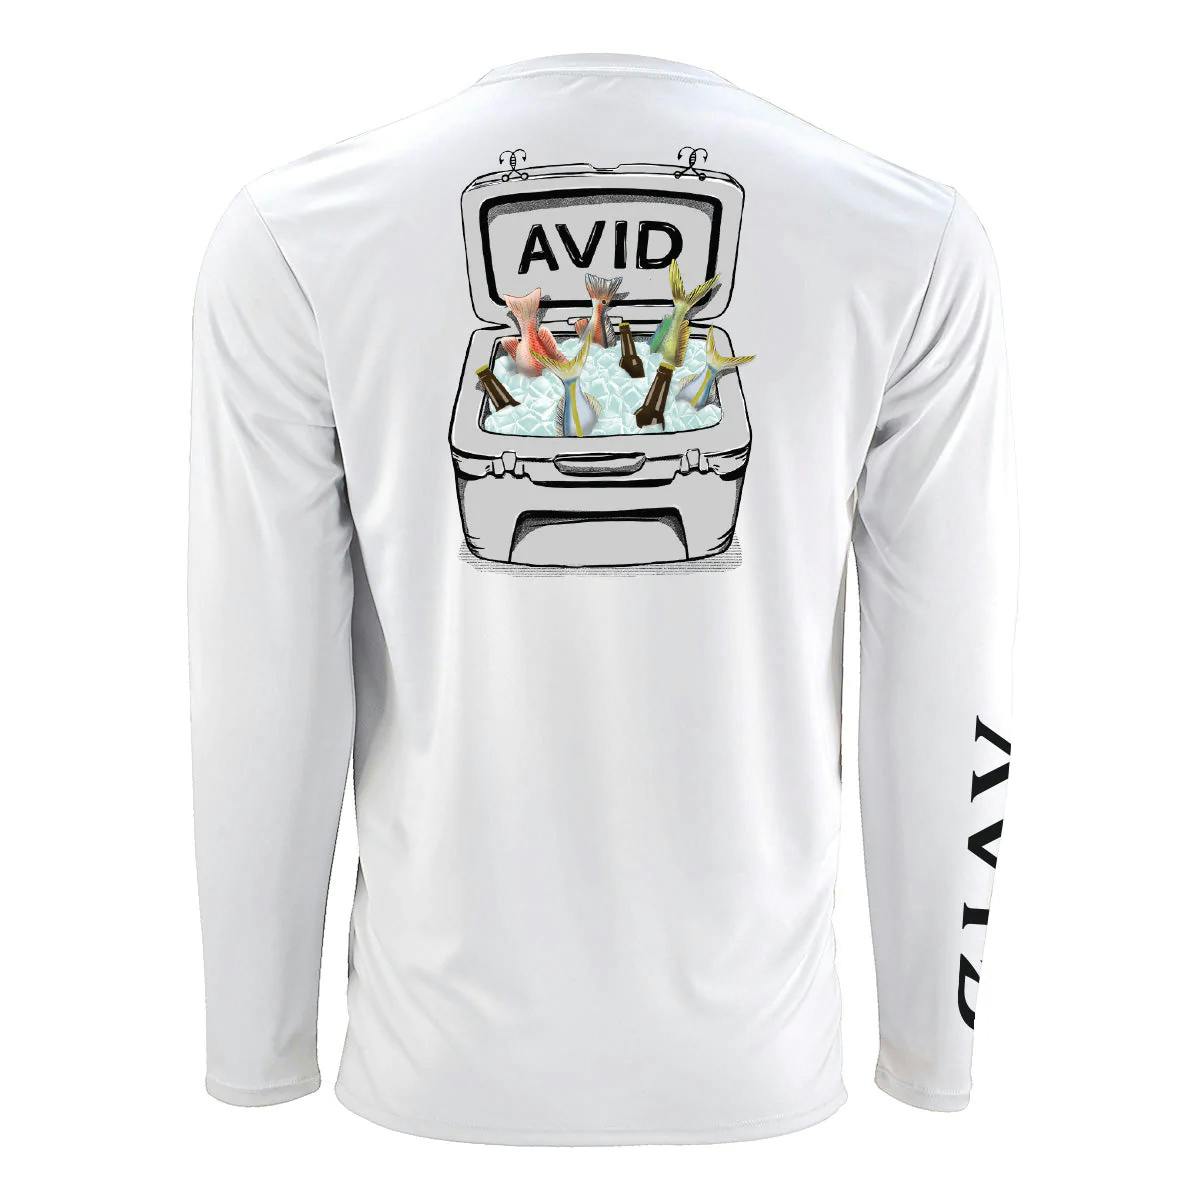 AVID Put ‘Em On Ice AVIDry Long Sleeve Performance Shirt - White